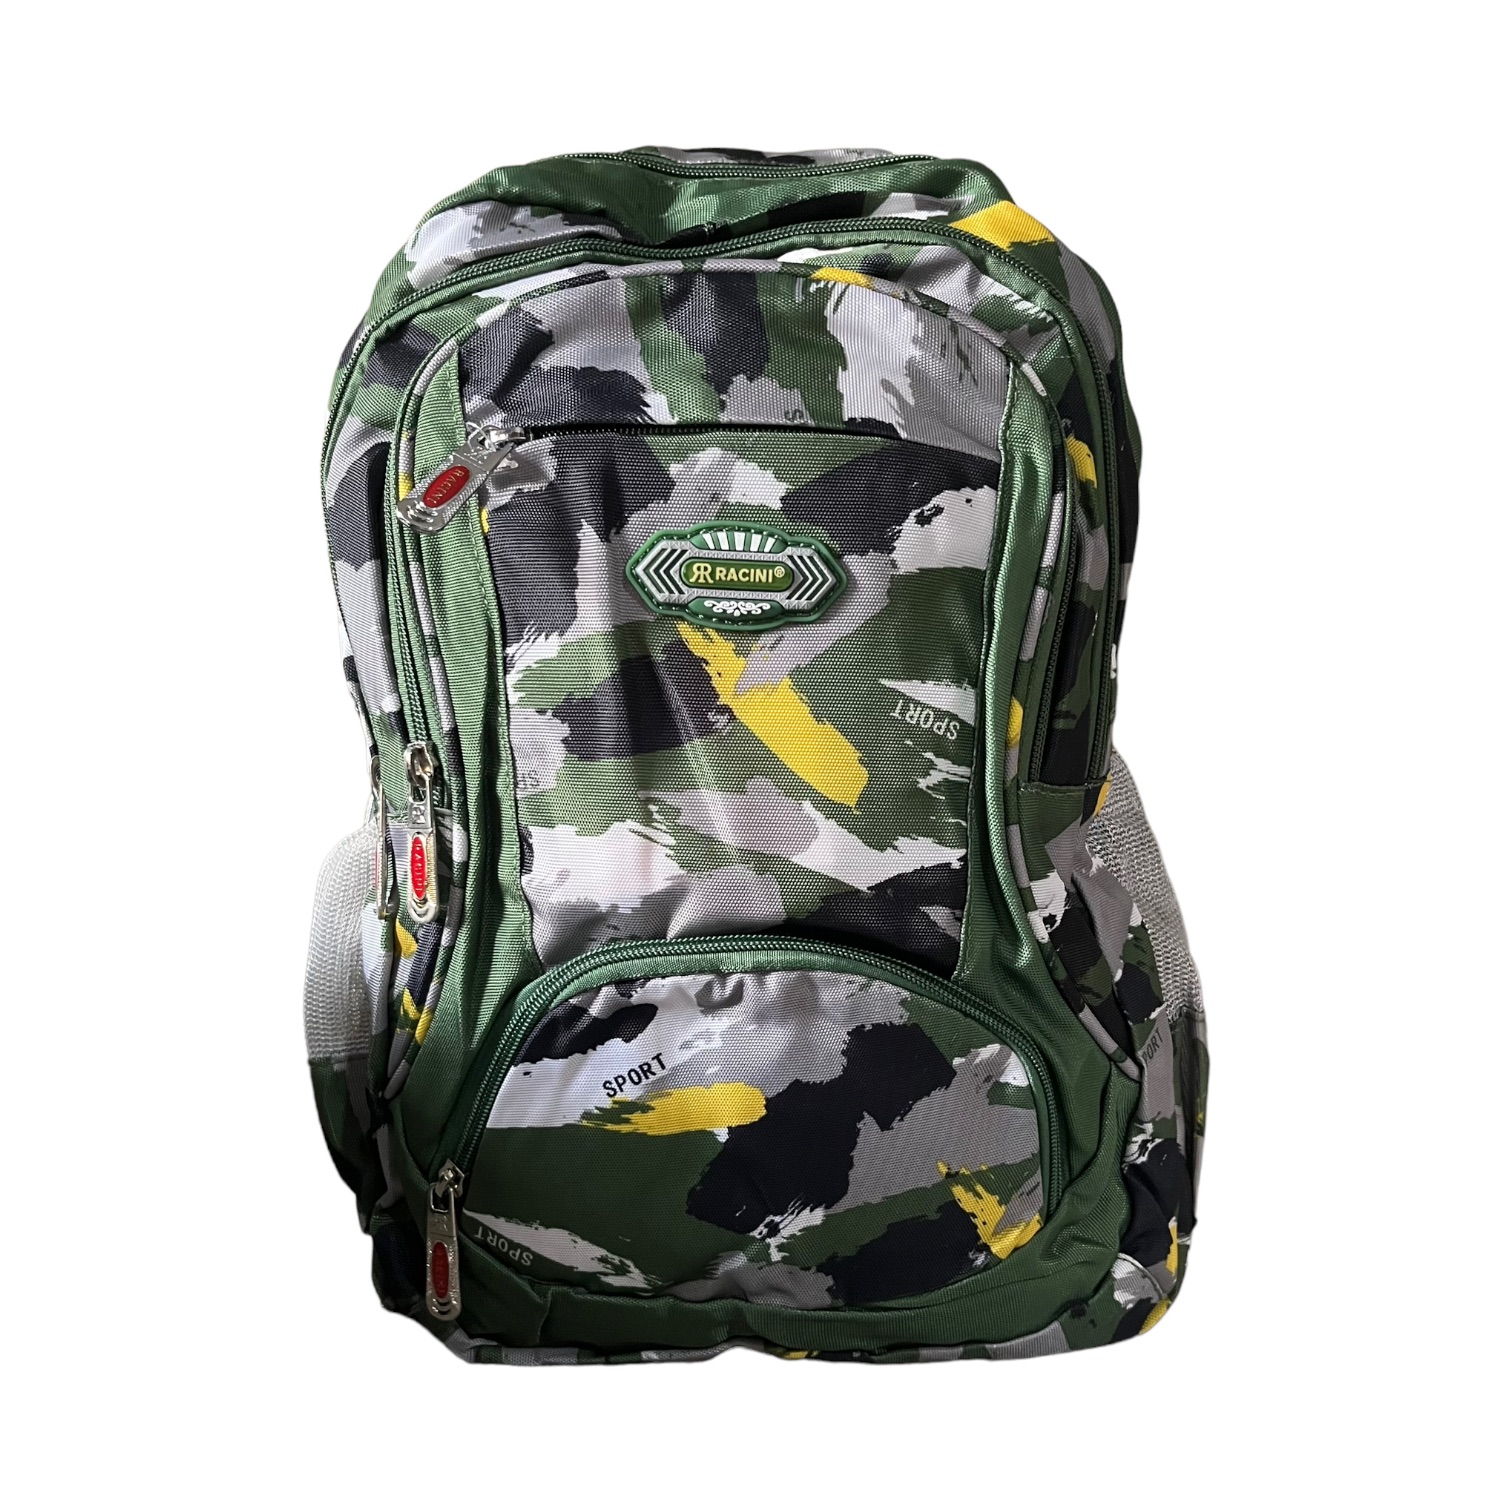 Racini Kid’s Backpack 55363 Green | Lazada PH